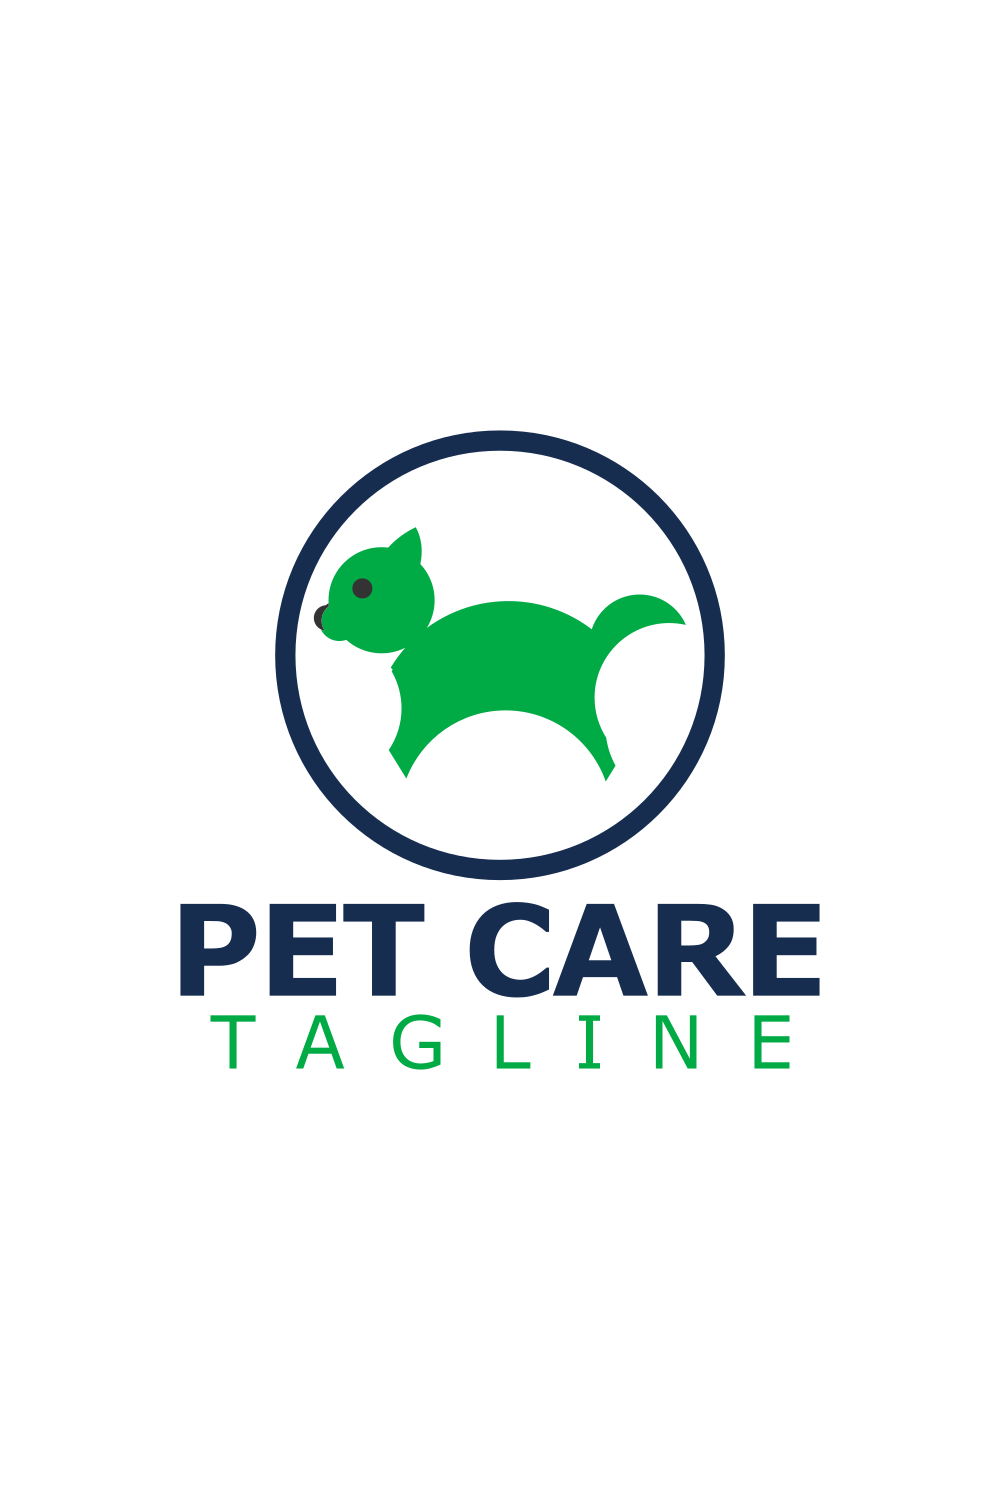 Elegant Pet Care Logo Design Template pinterest image.